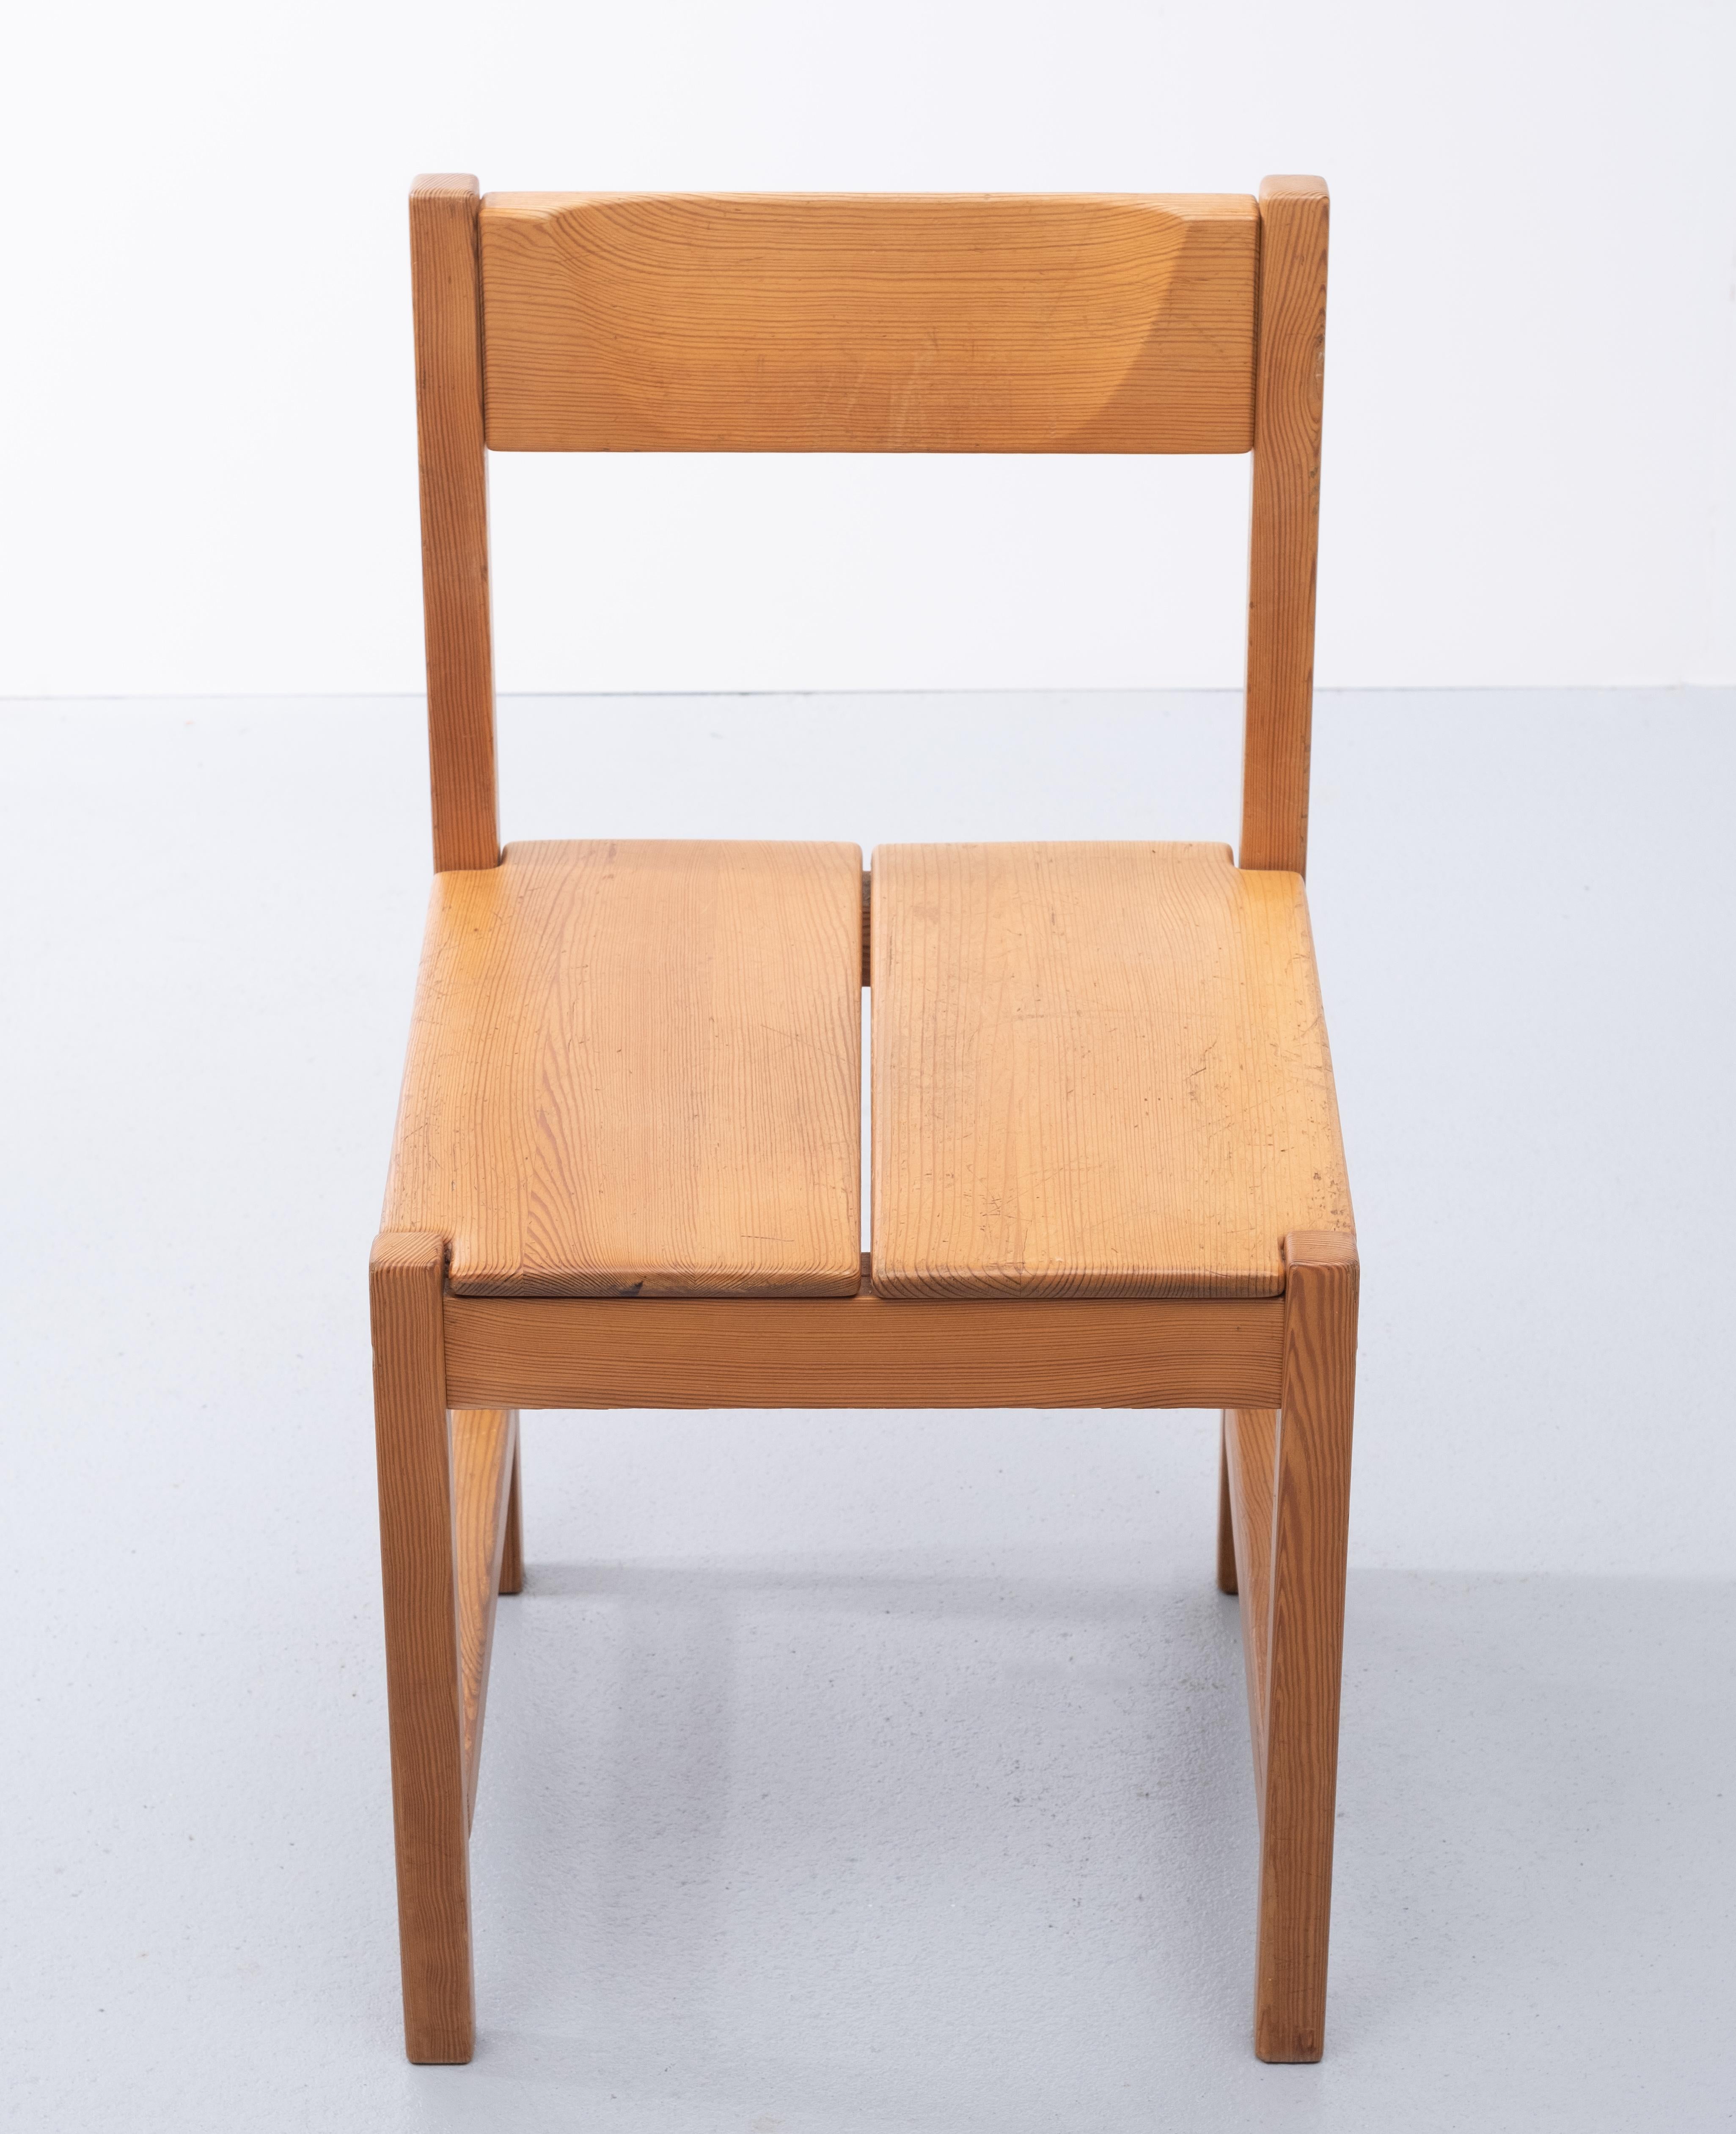 Tapio Wirkkala Pine Dining Chairs, 1960s For Sale 6